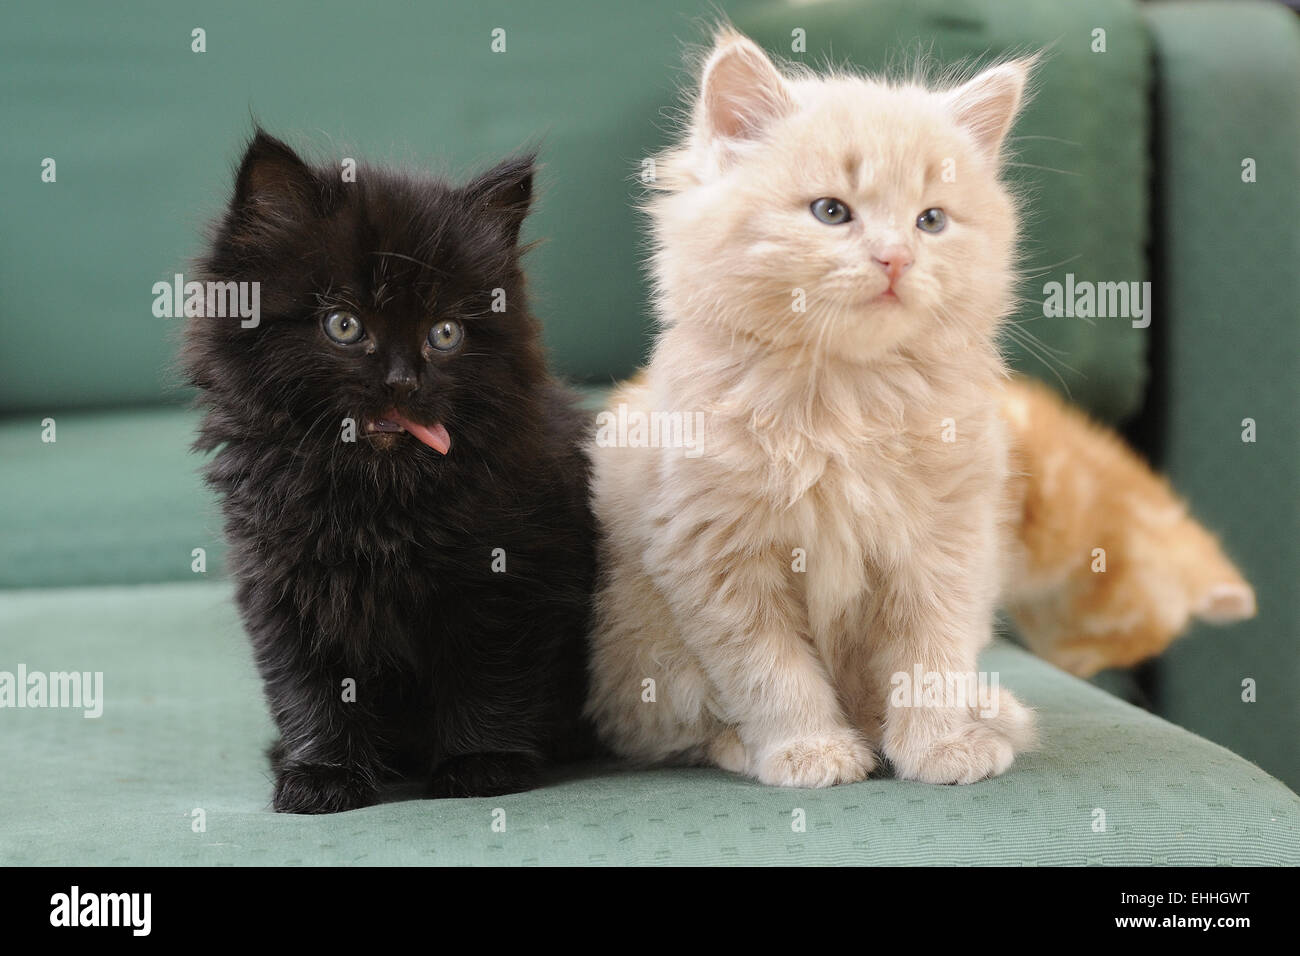 baby cats Stock Photo